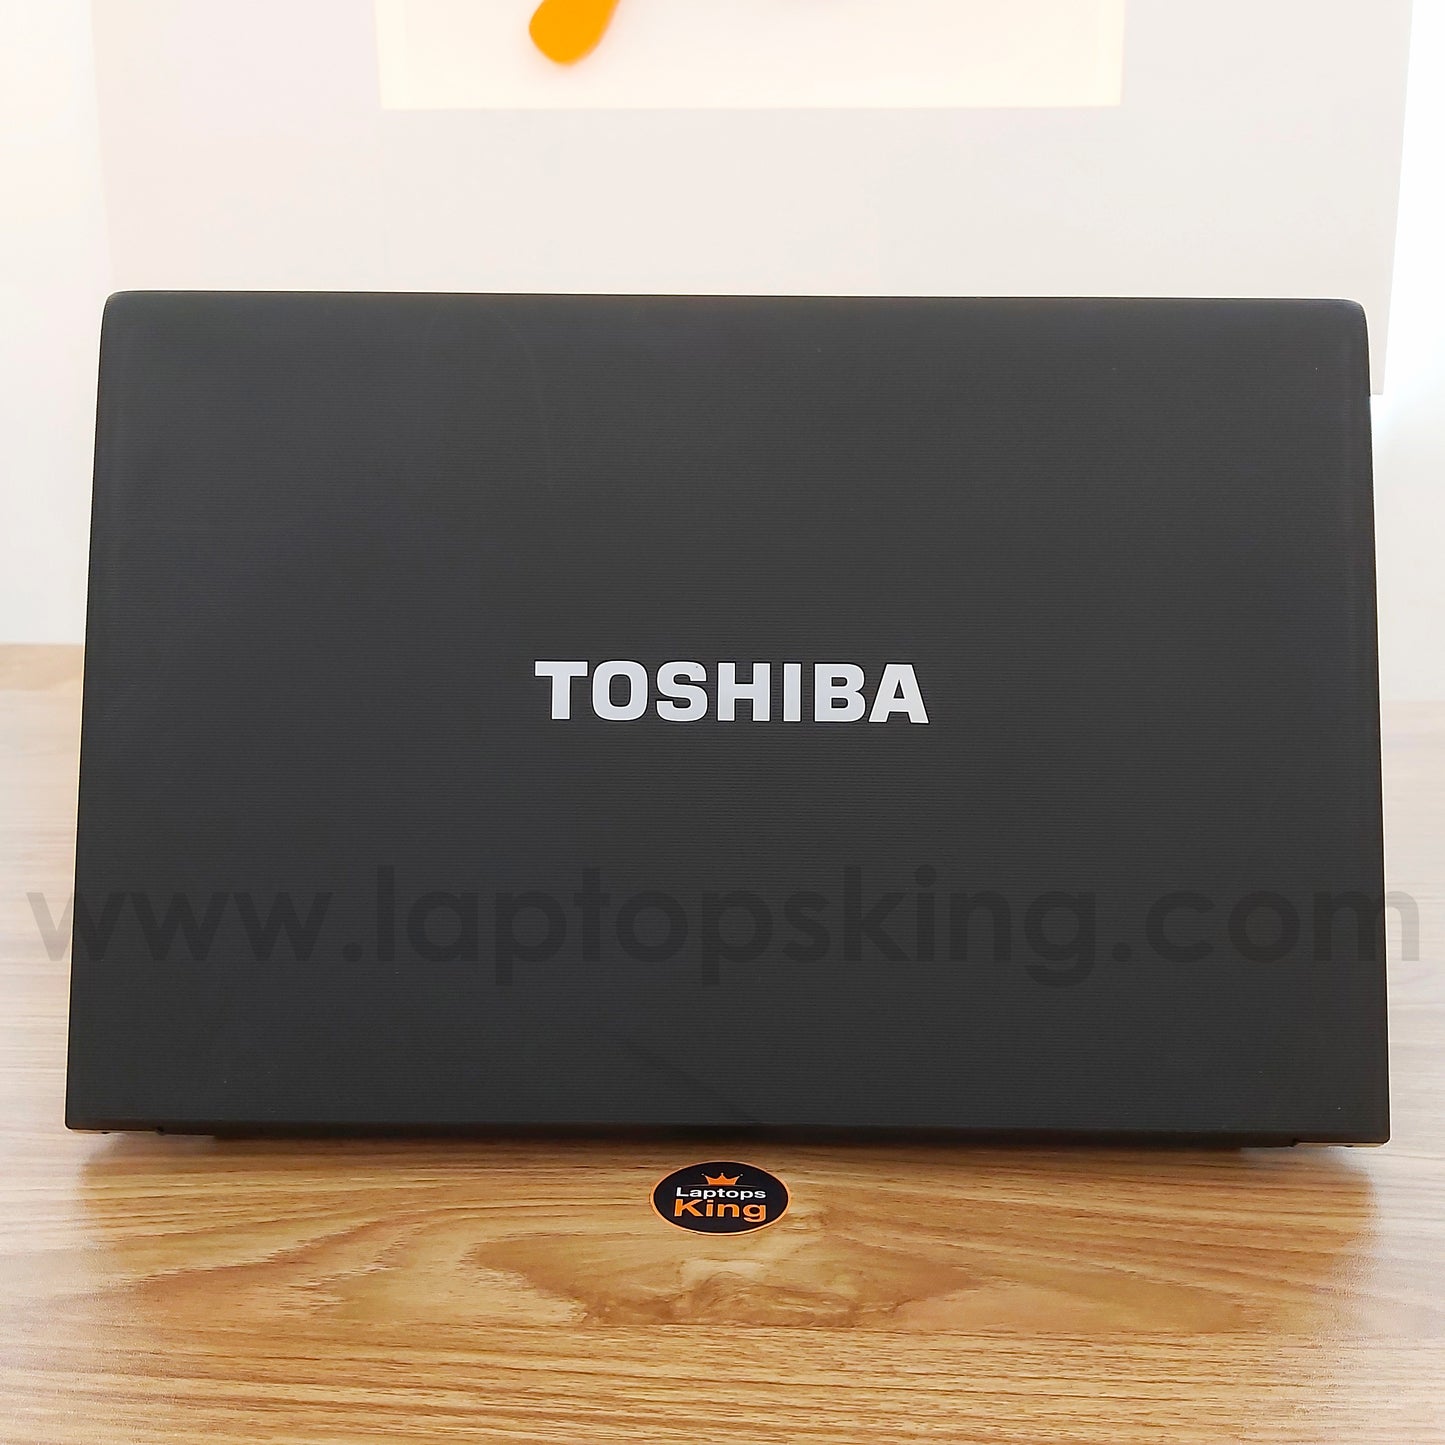 Toshiba Tecra R850 Core i5 15.6" Laptop (Used Very Clean)